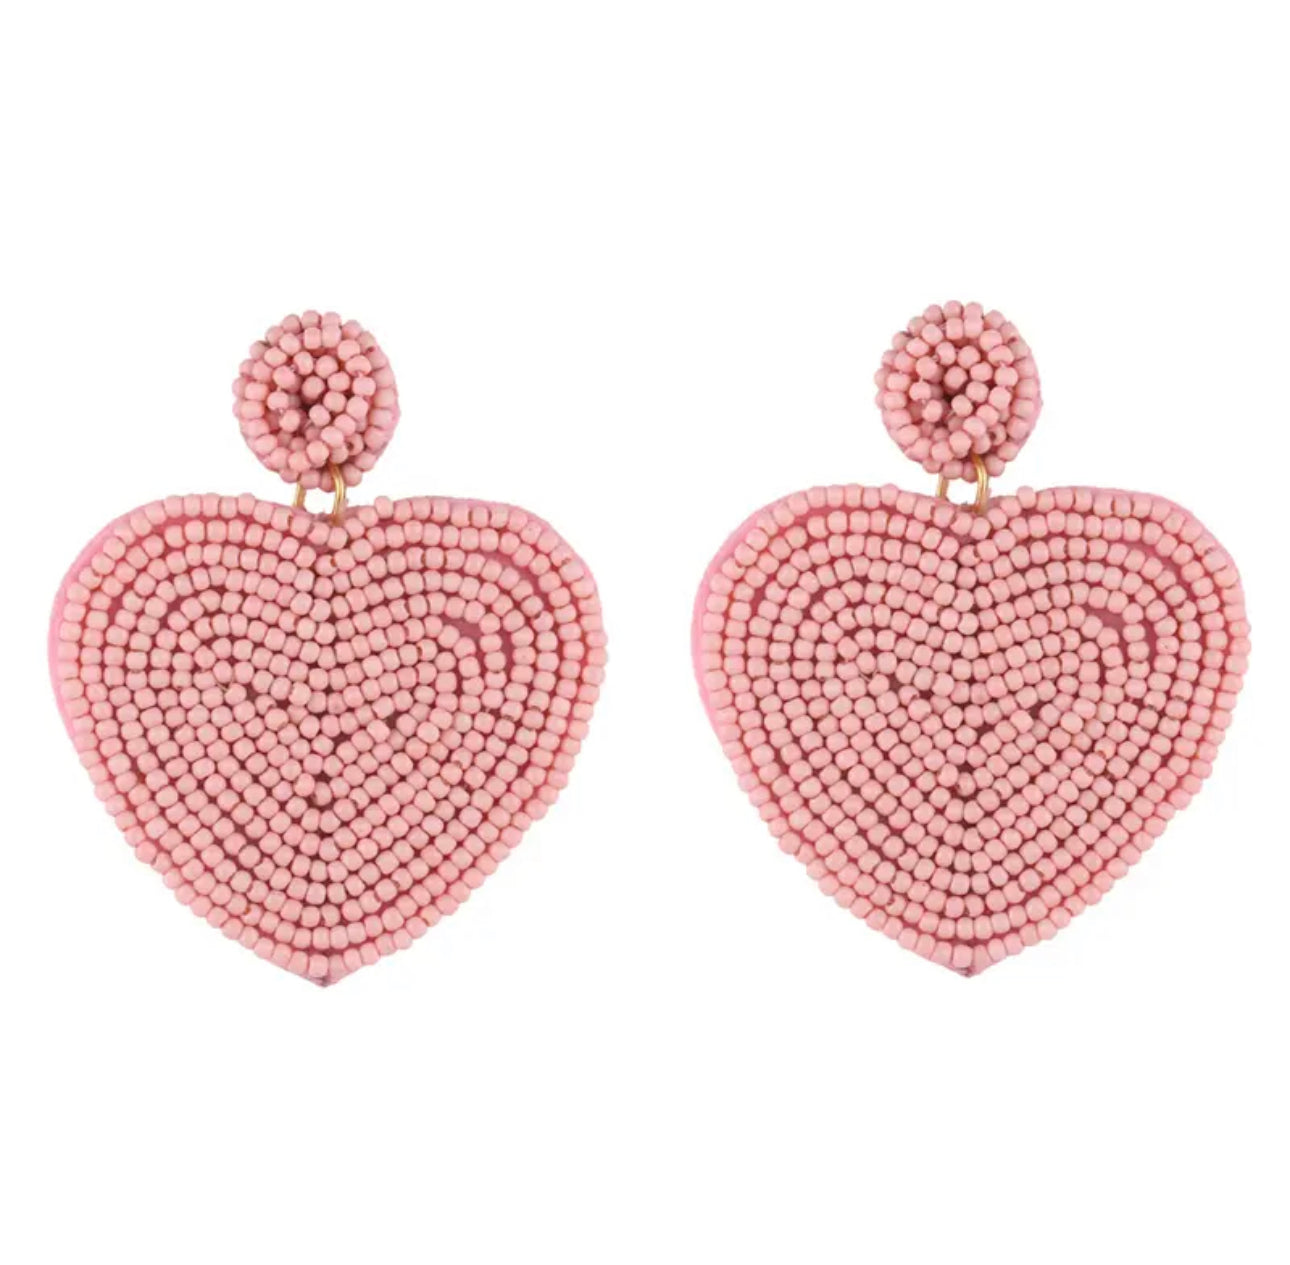 Erika Williner Designs - beaded hearts earrings